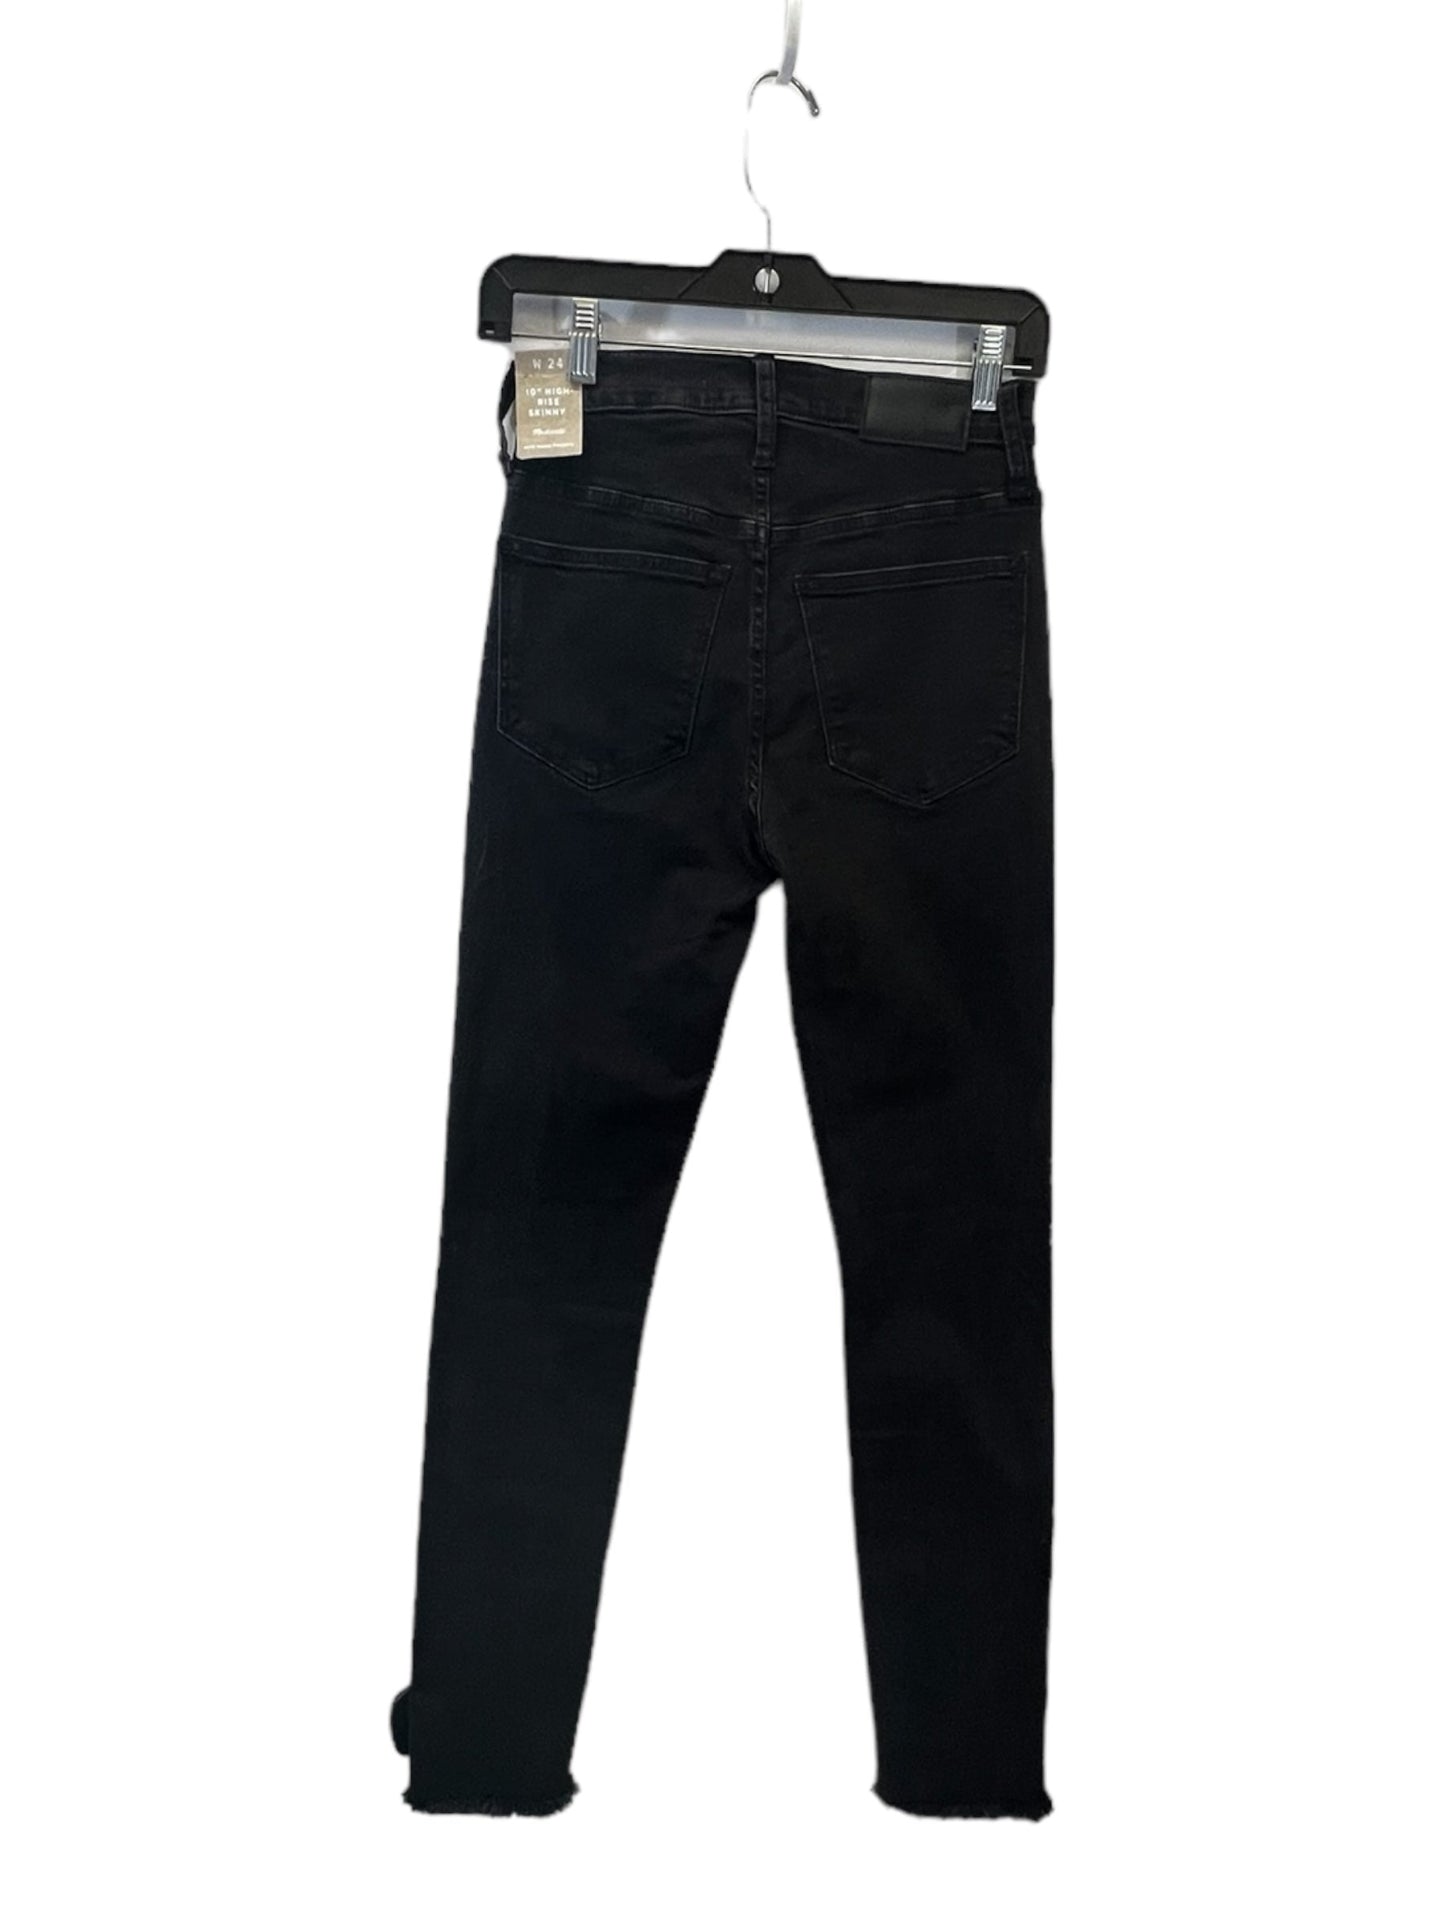 Black Jeans Designer Madewell, Size 2